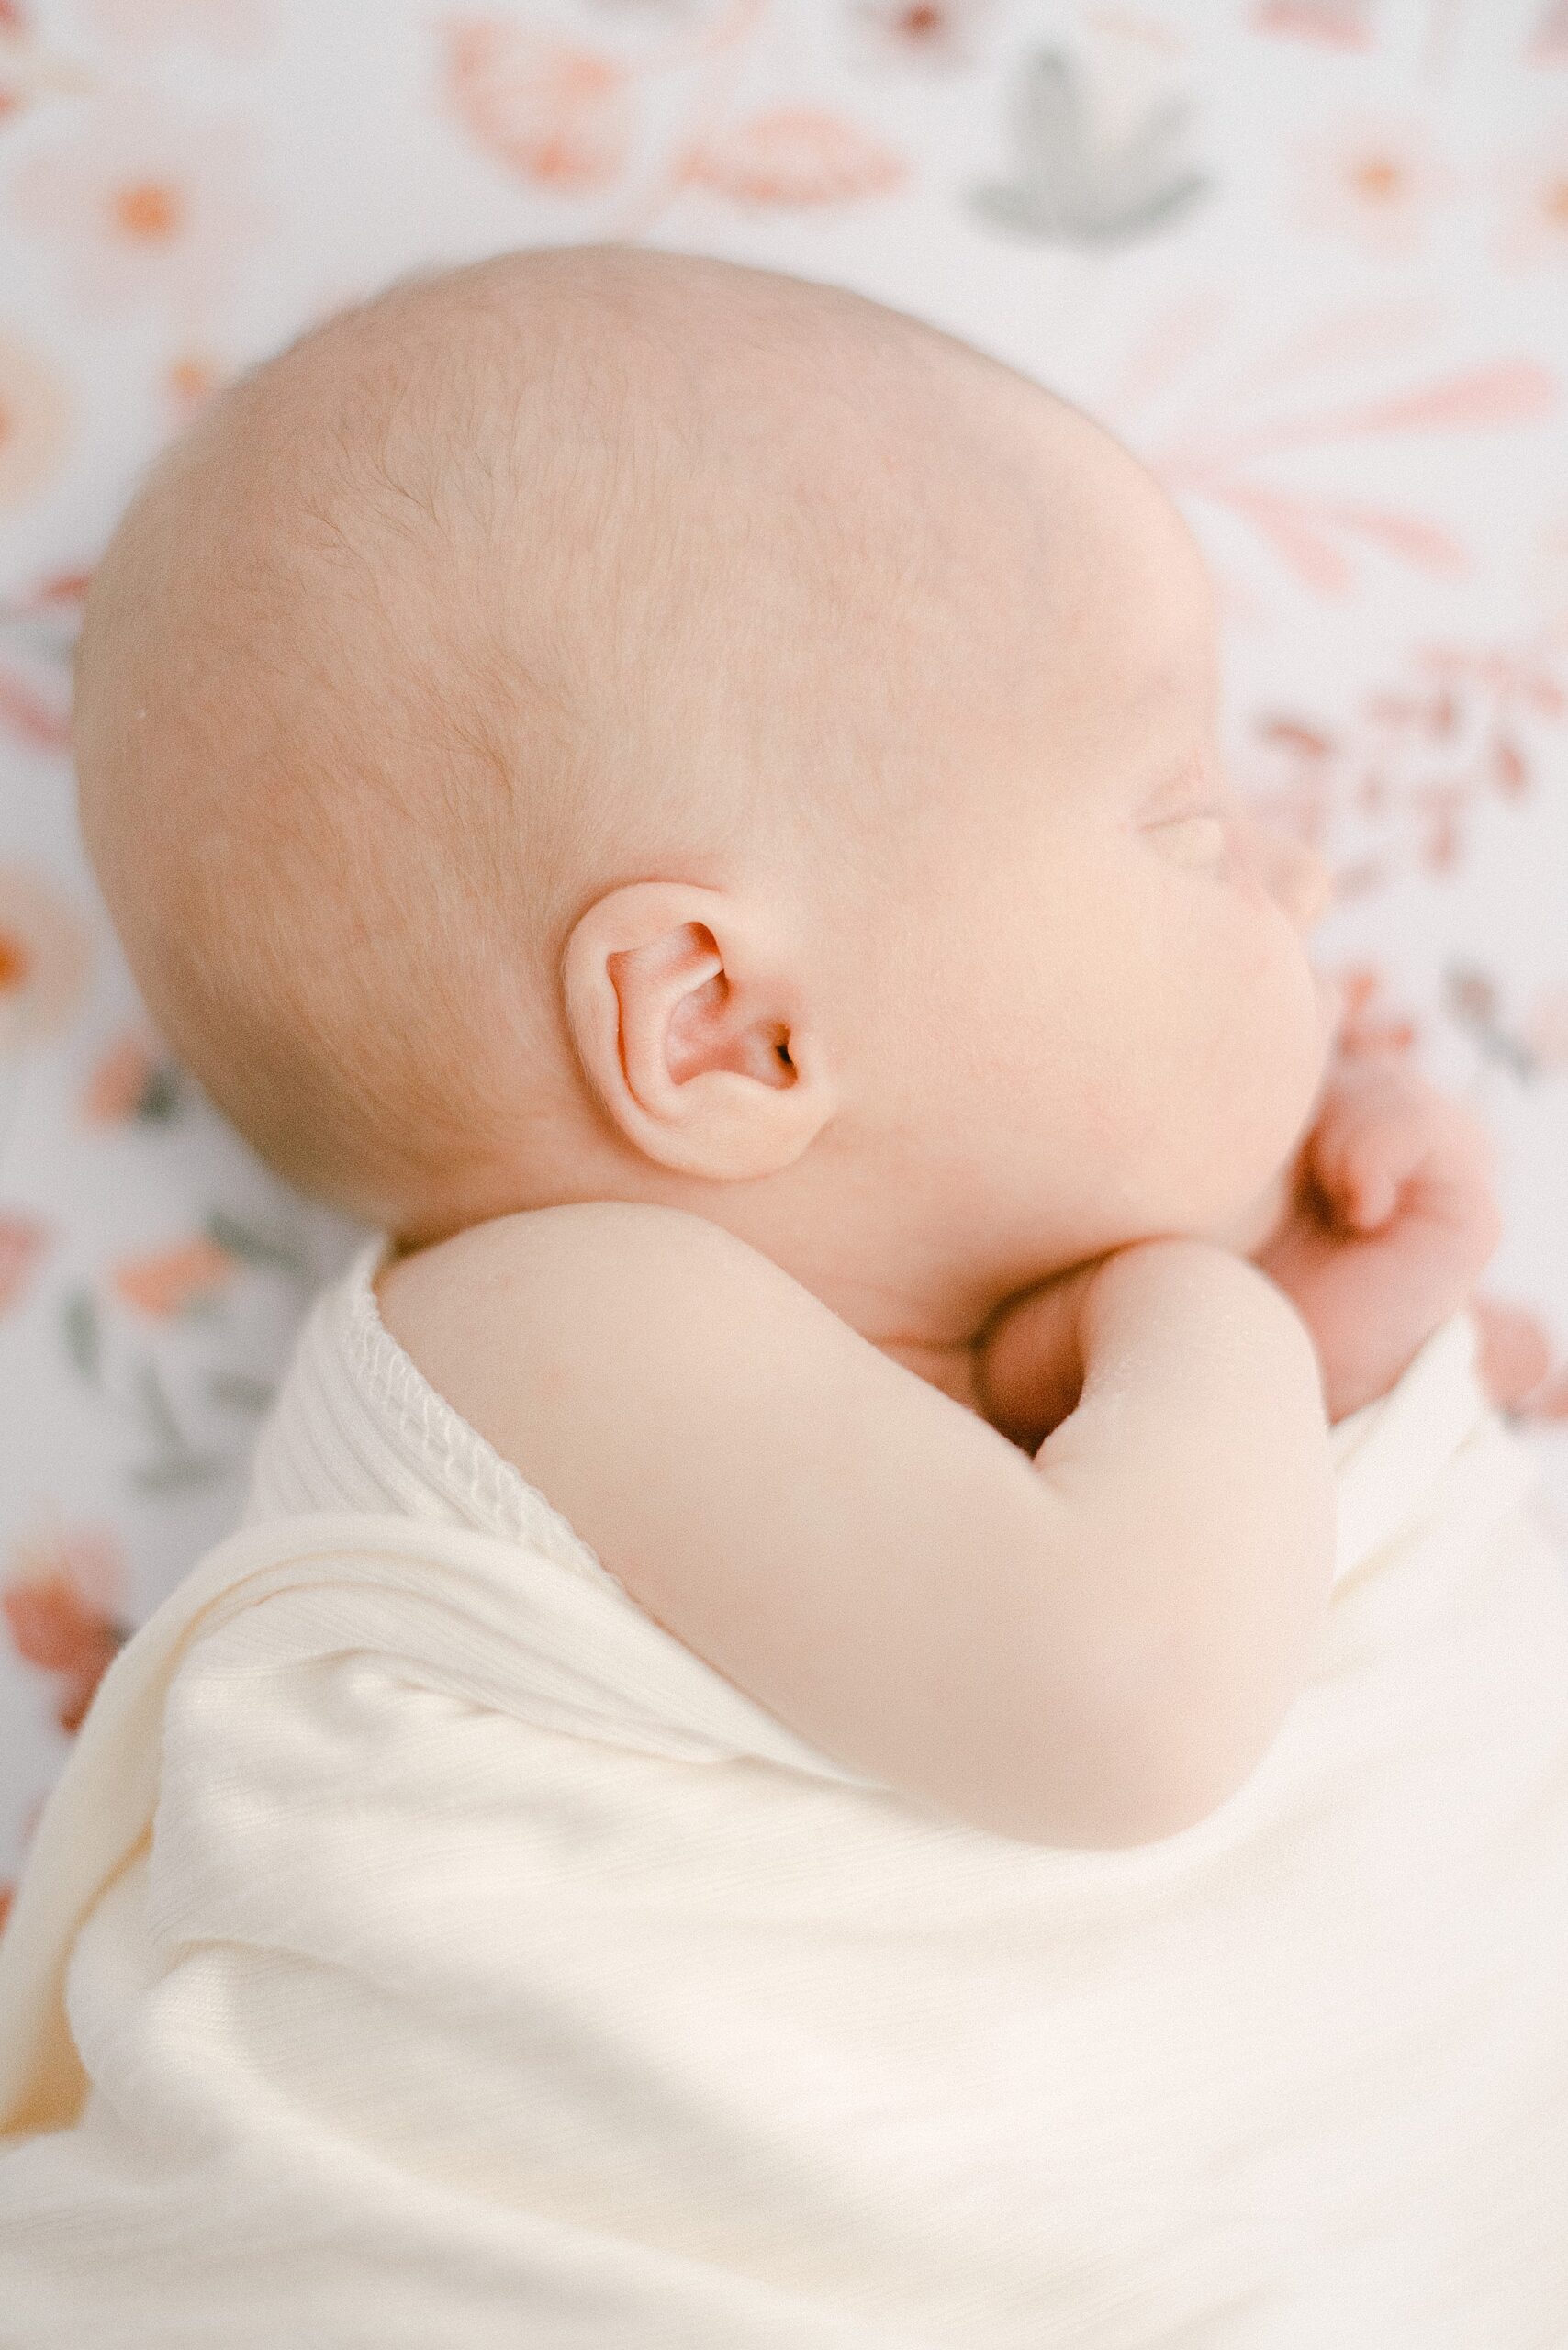 Side profile of newborn baby ear while baby is sleeping in nursery